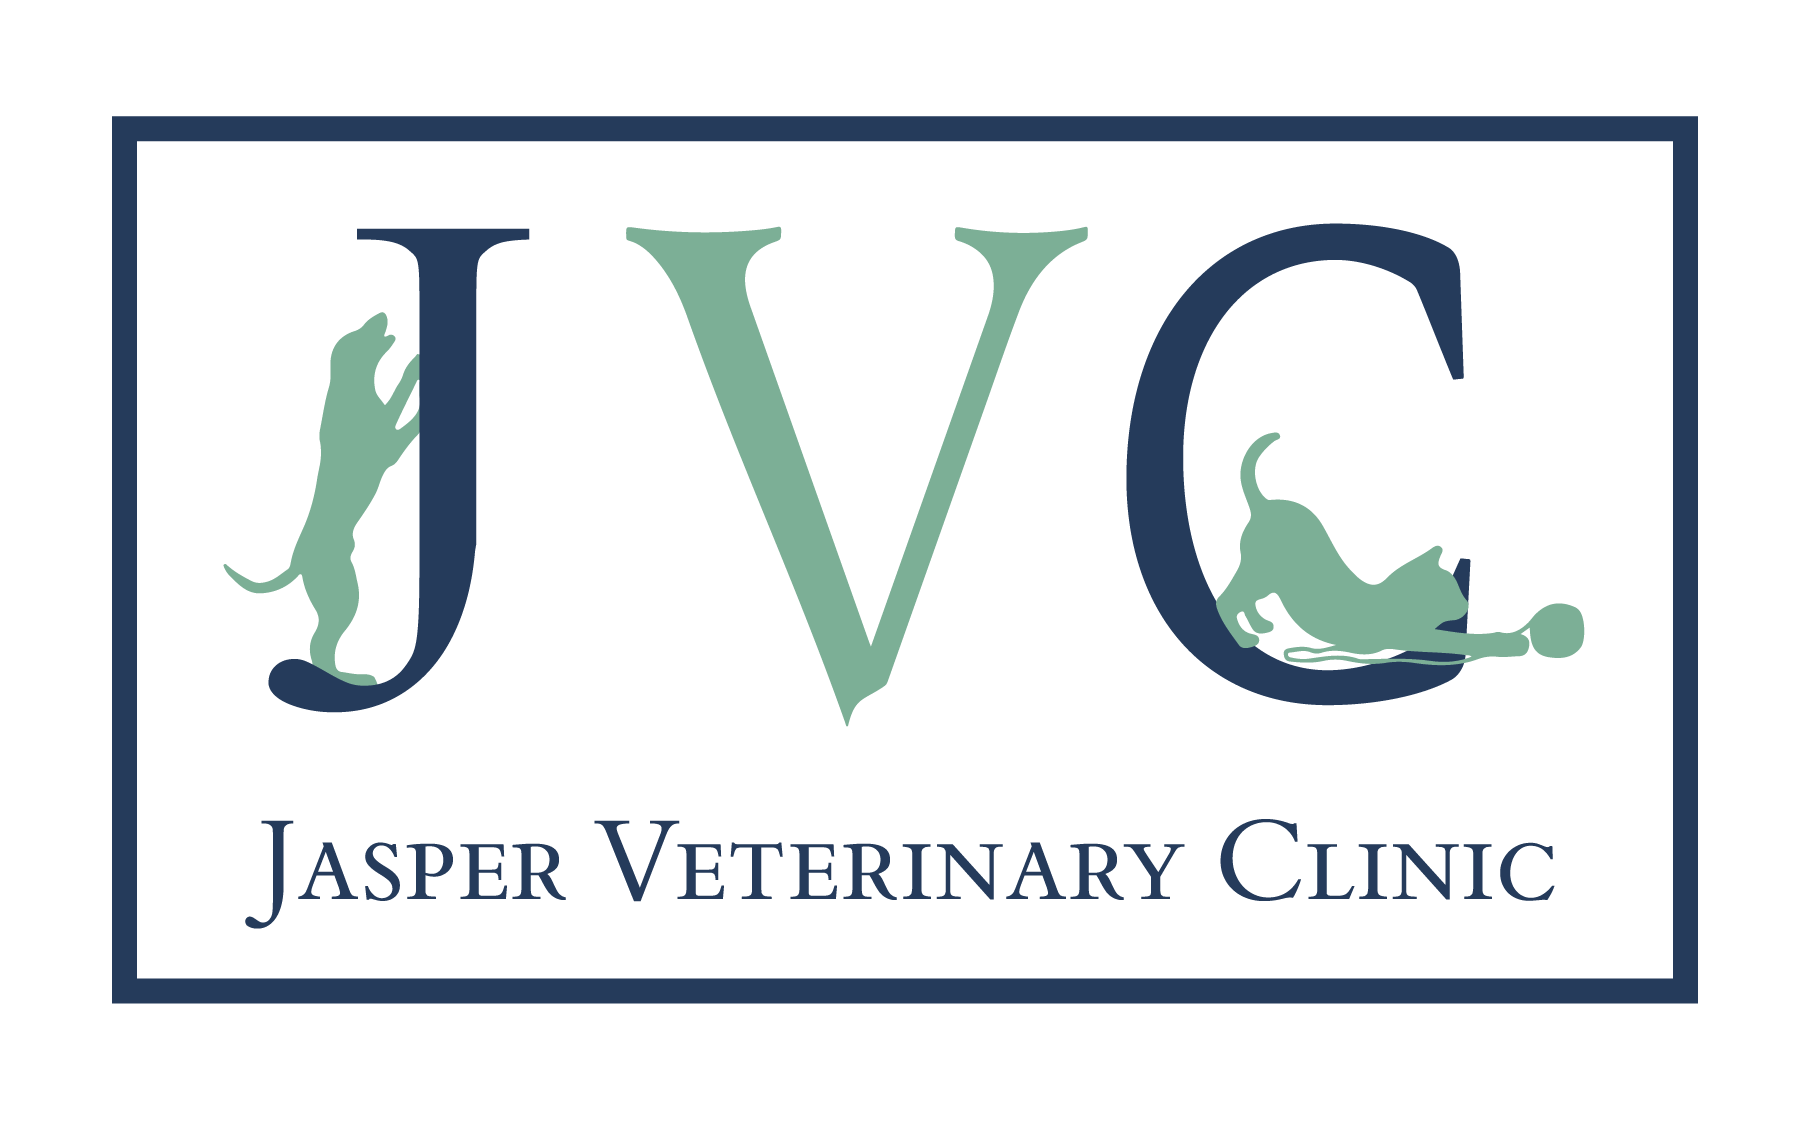 Jasper Veterinary Clinic